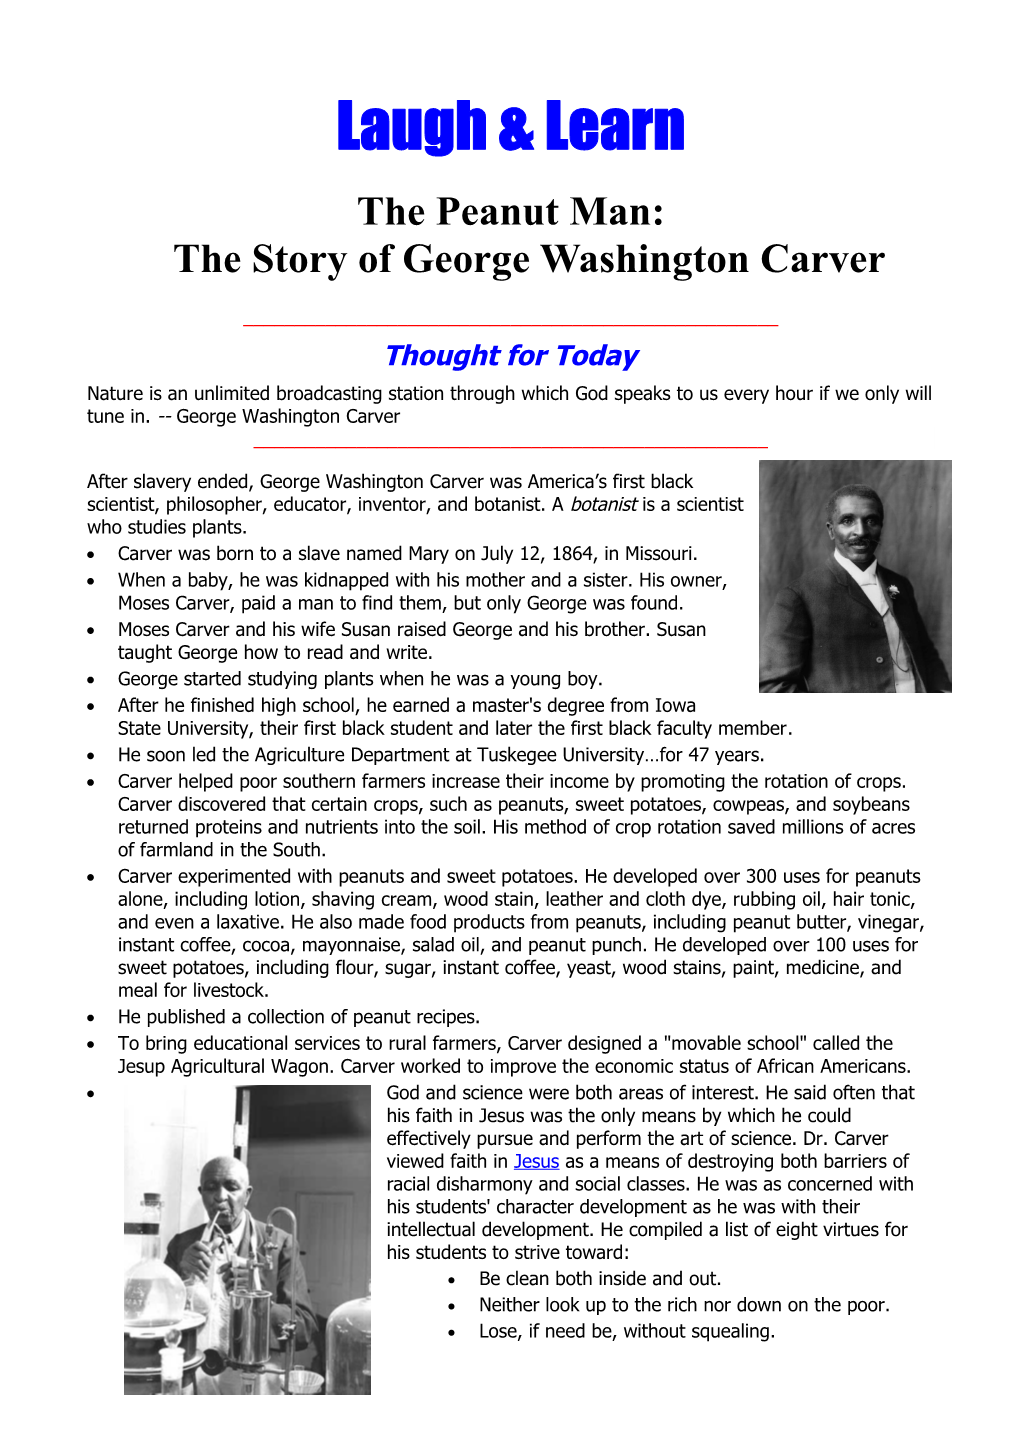 The Peanut Man:The Story of George Washington Carver